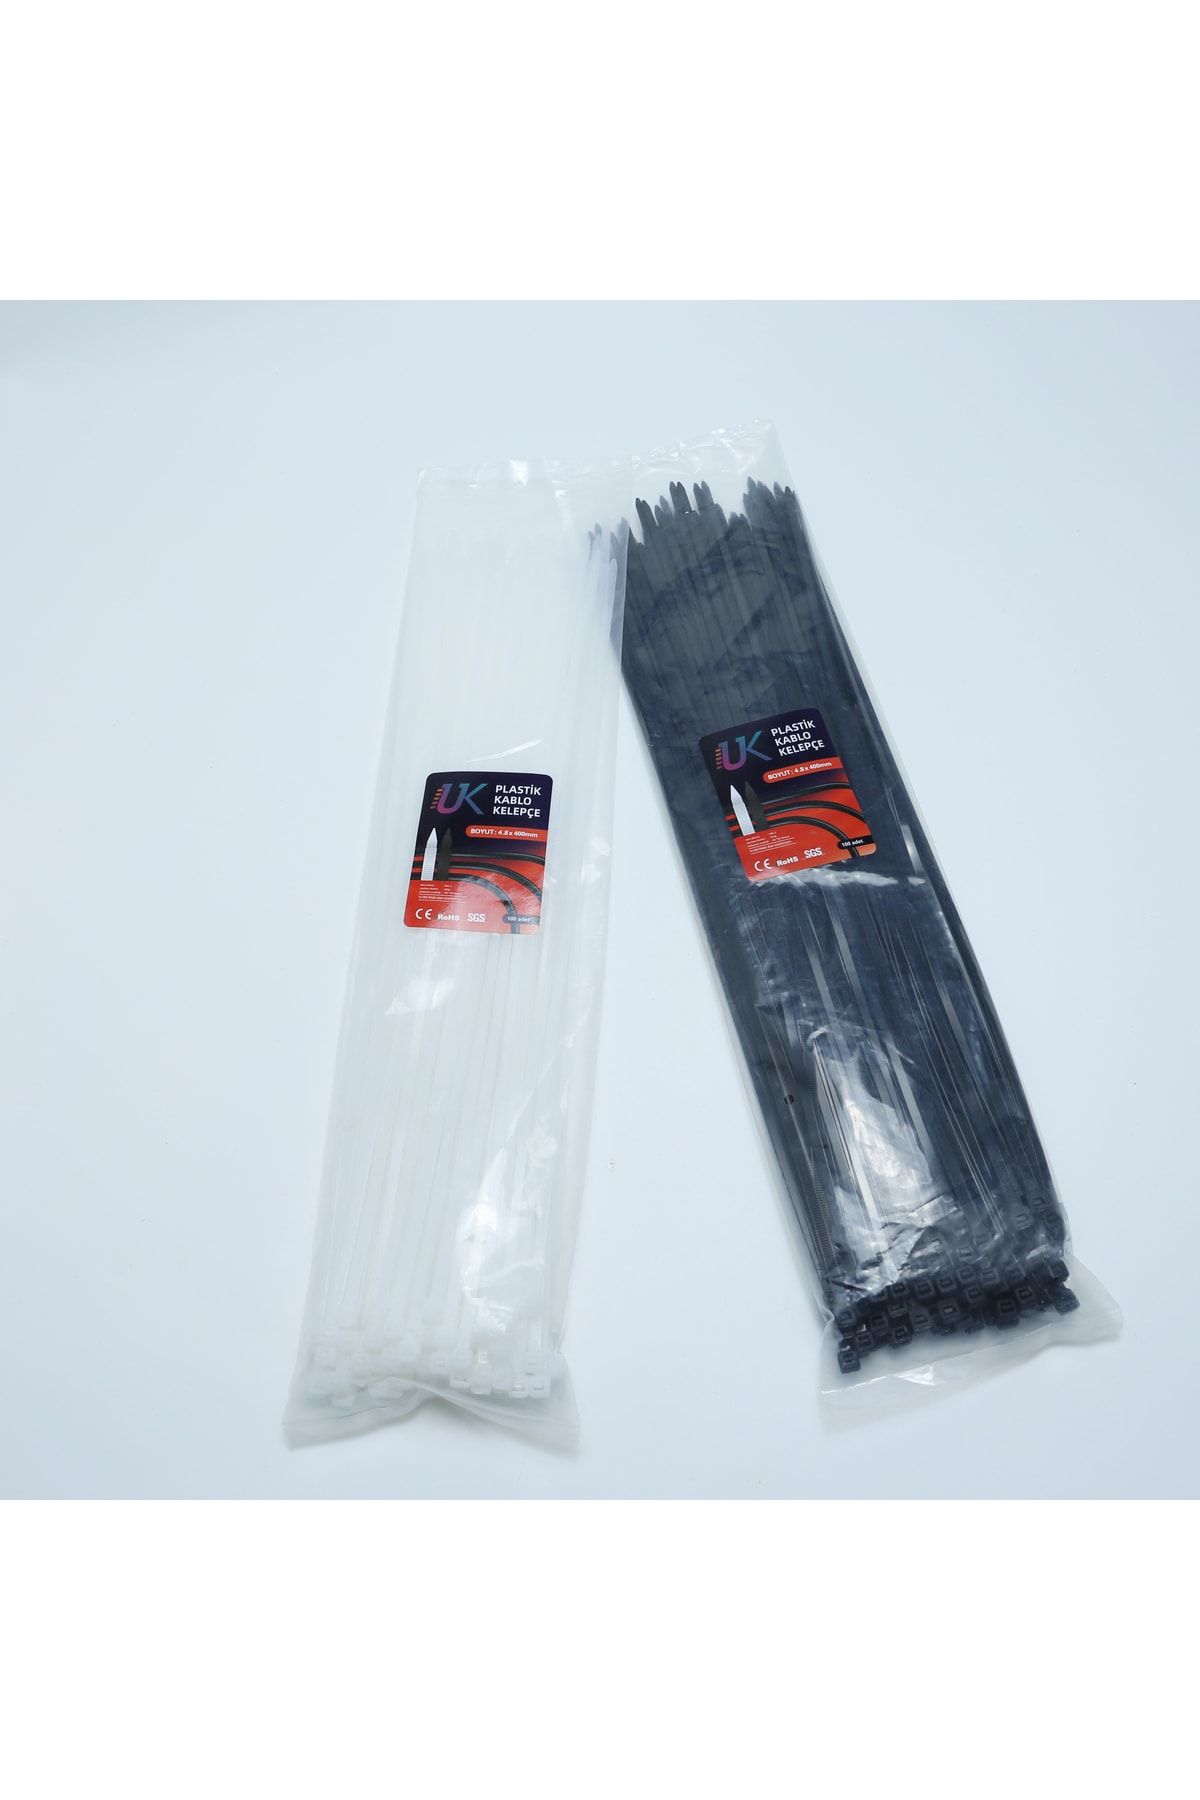 UK Plastik Kablo Bağı Plastik Kelepçe Cırt Klips 4.8x400mm 100 Adet